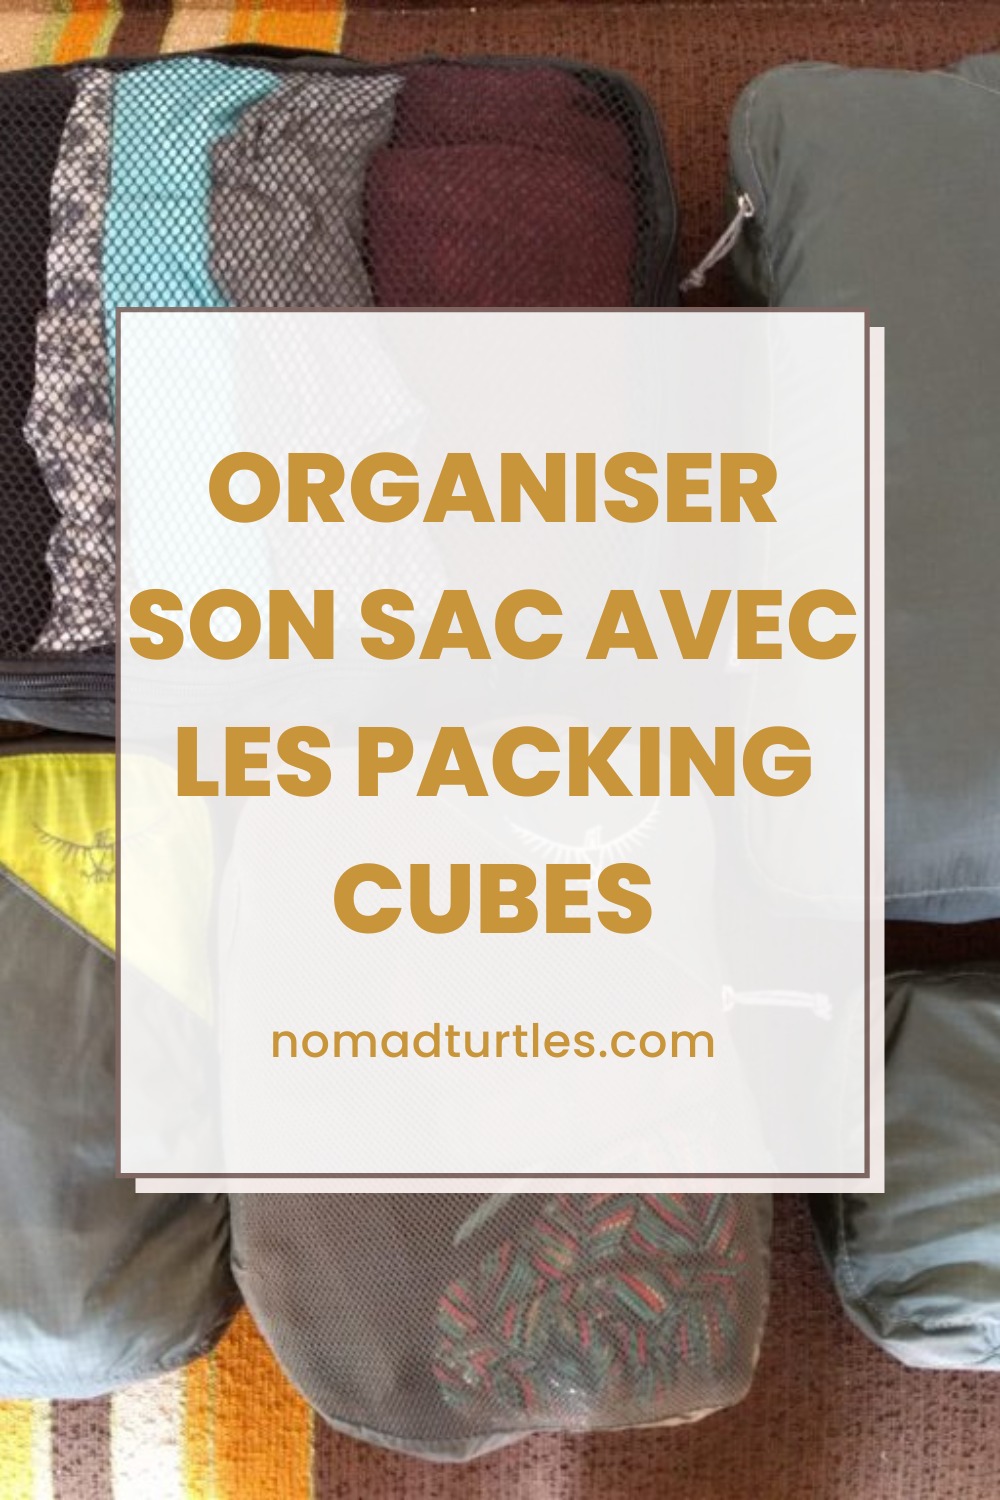 Organiser son sac avec les packing cubes - Nomad turtles